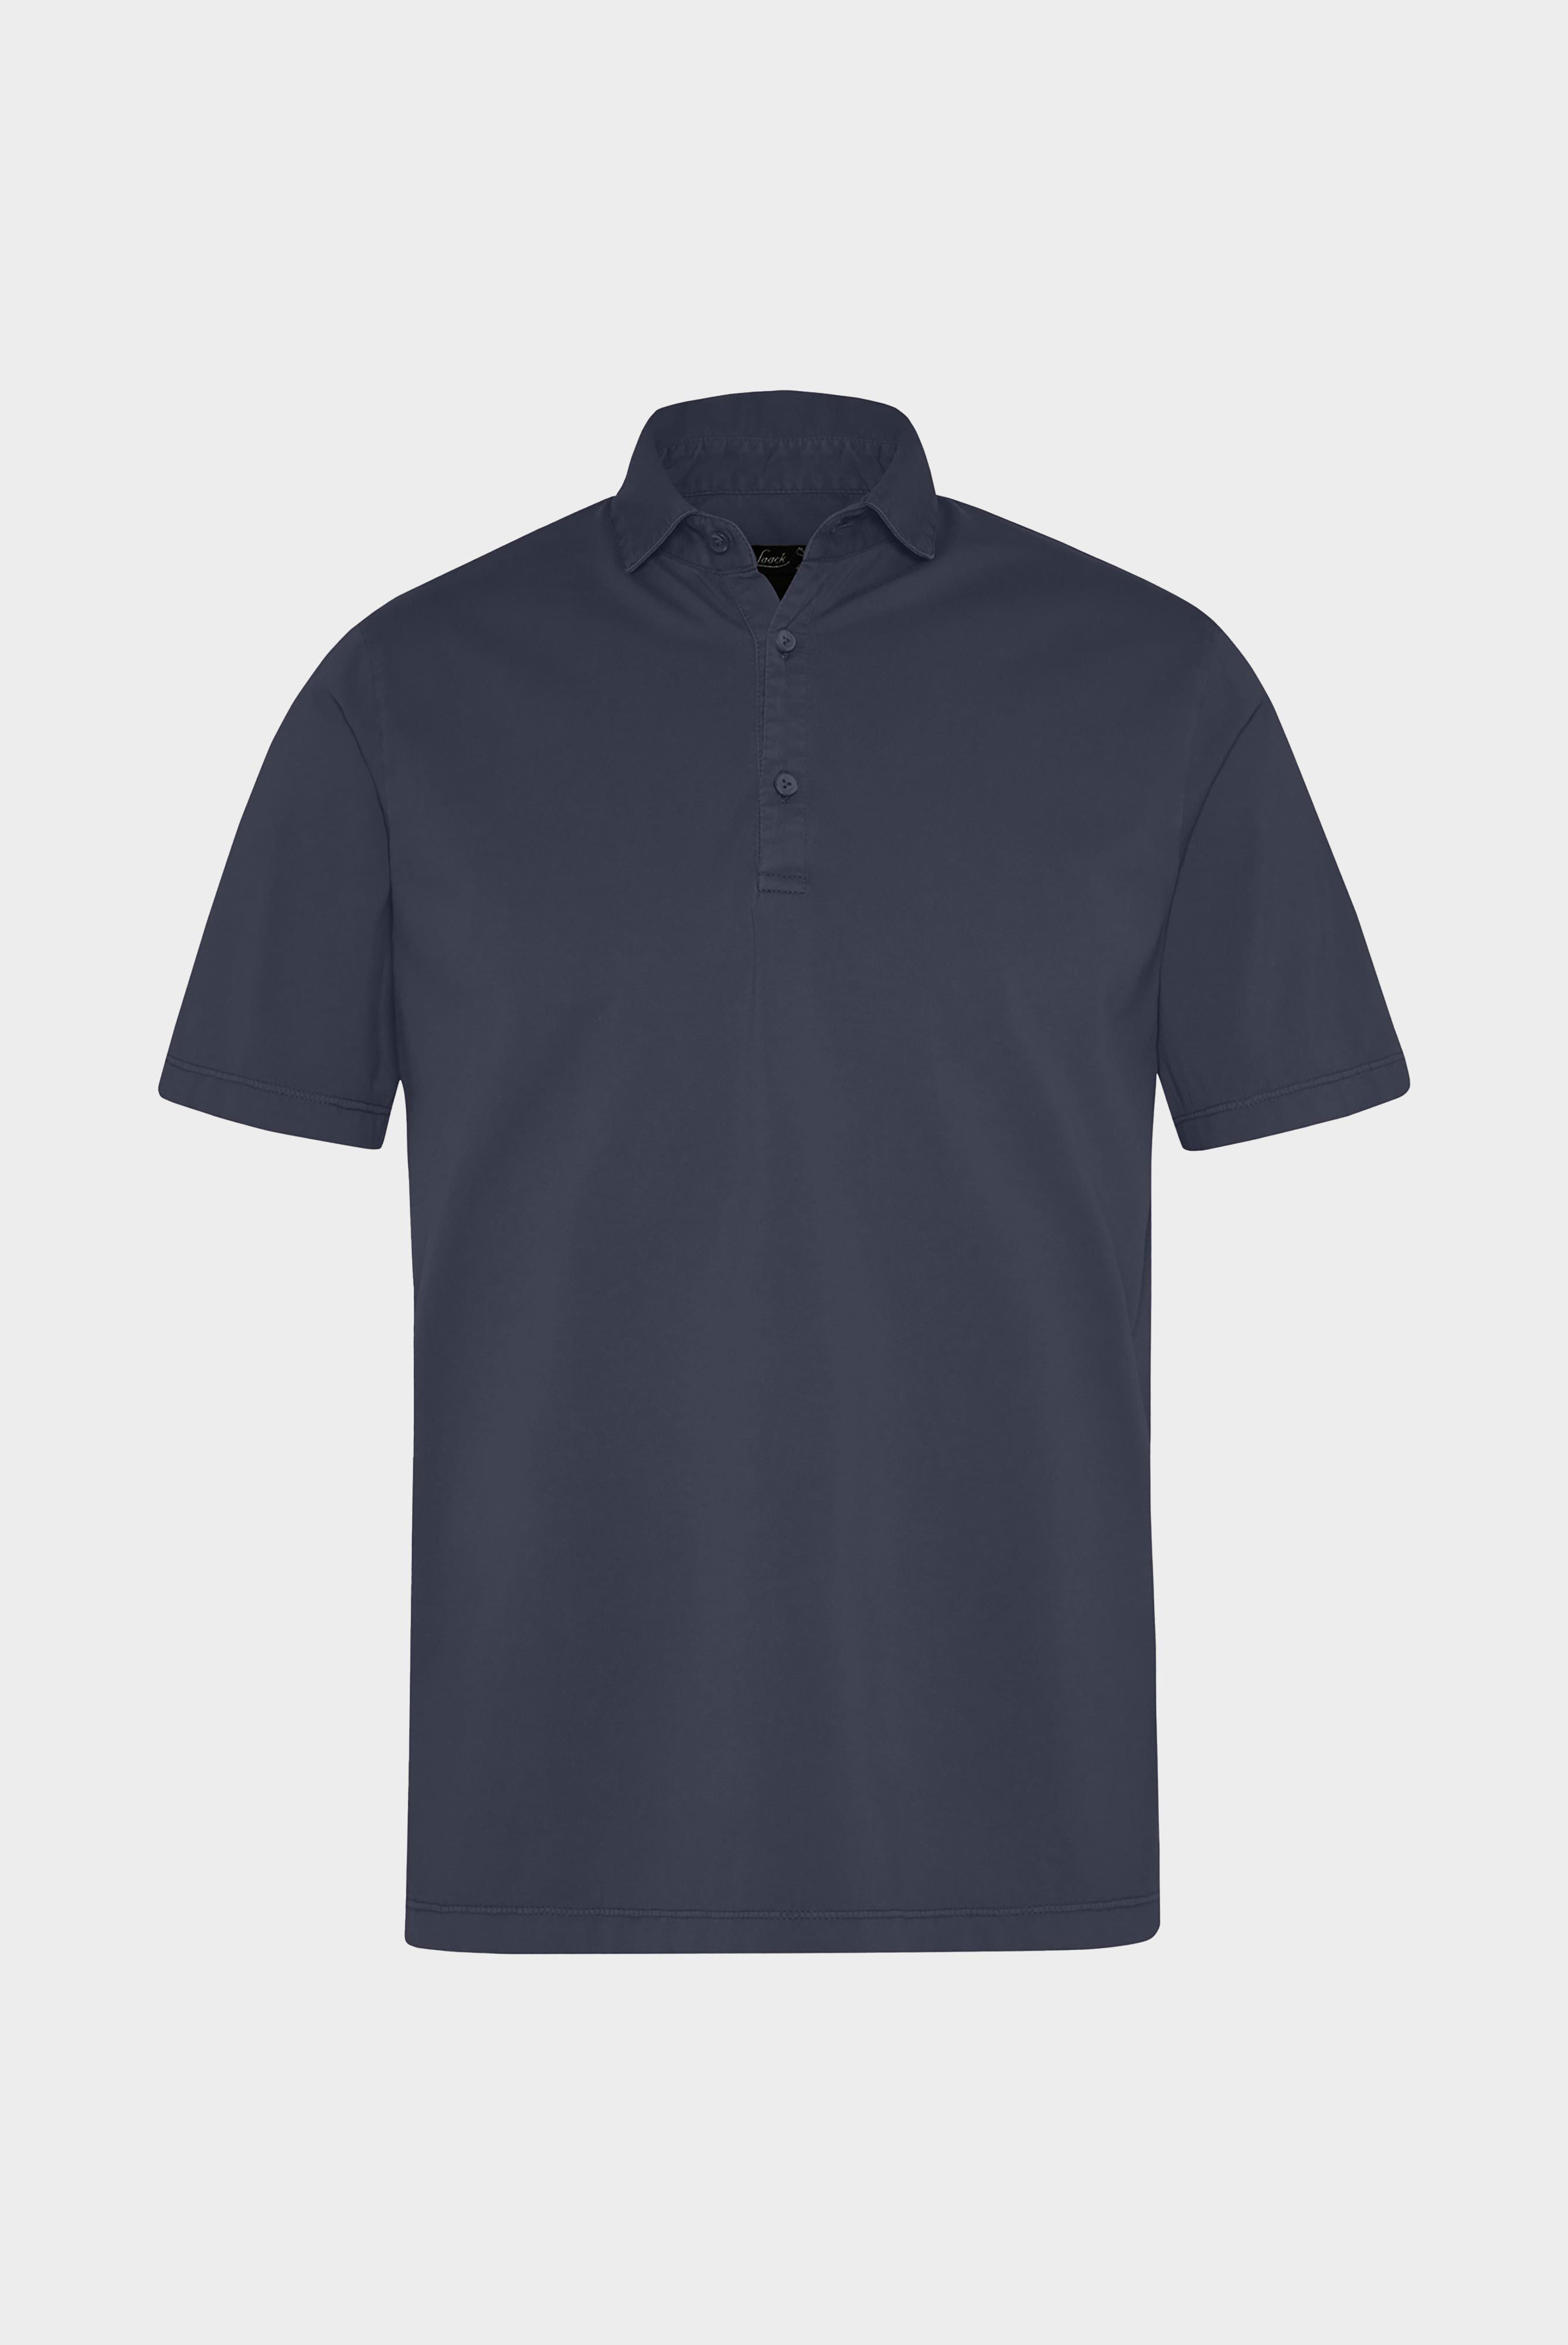 Poloshirts+Jersey Polo Shirt Urban Look+20.1650..Z20044.790.XL